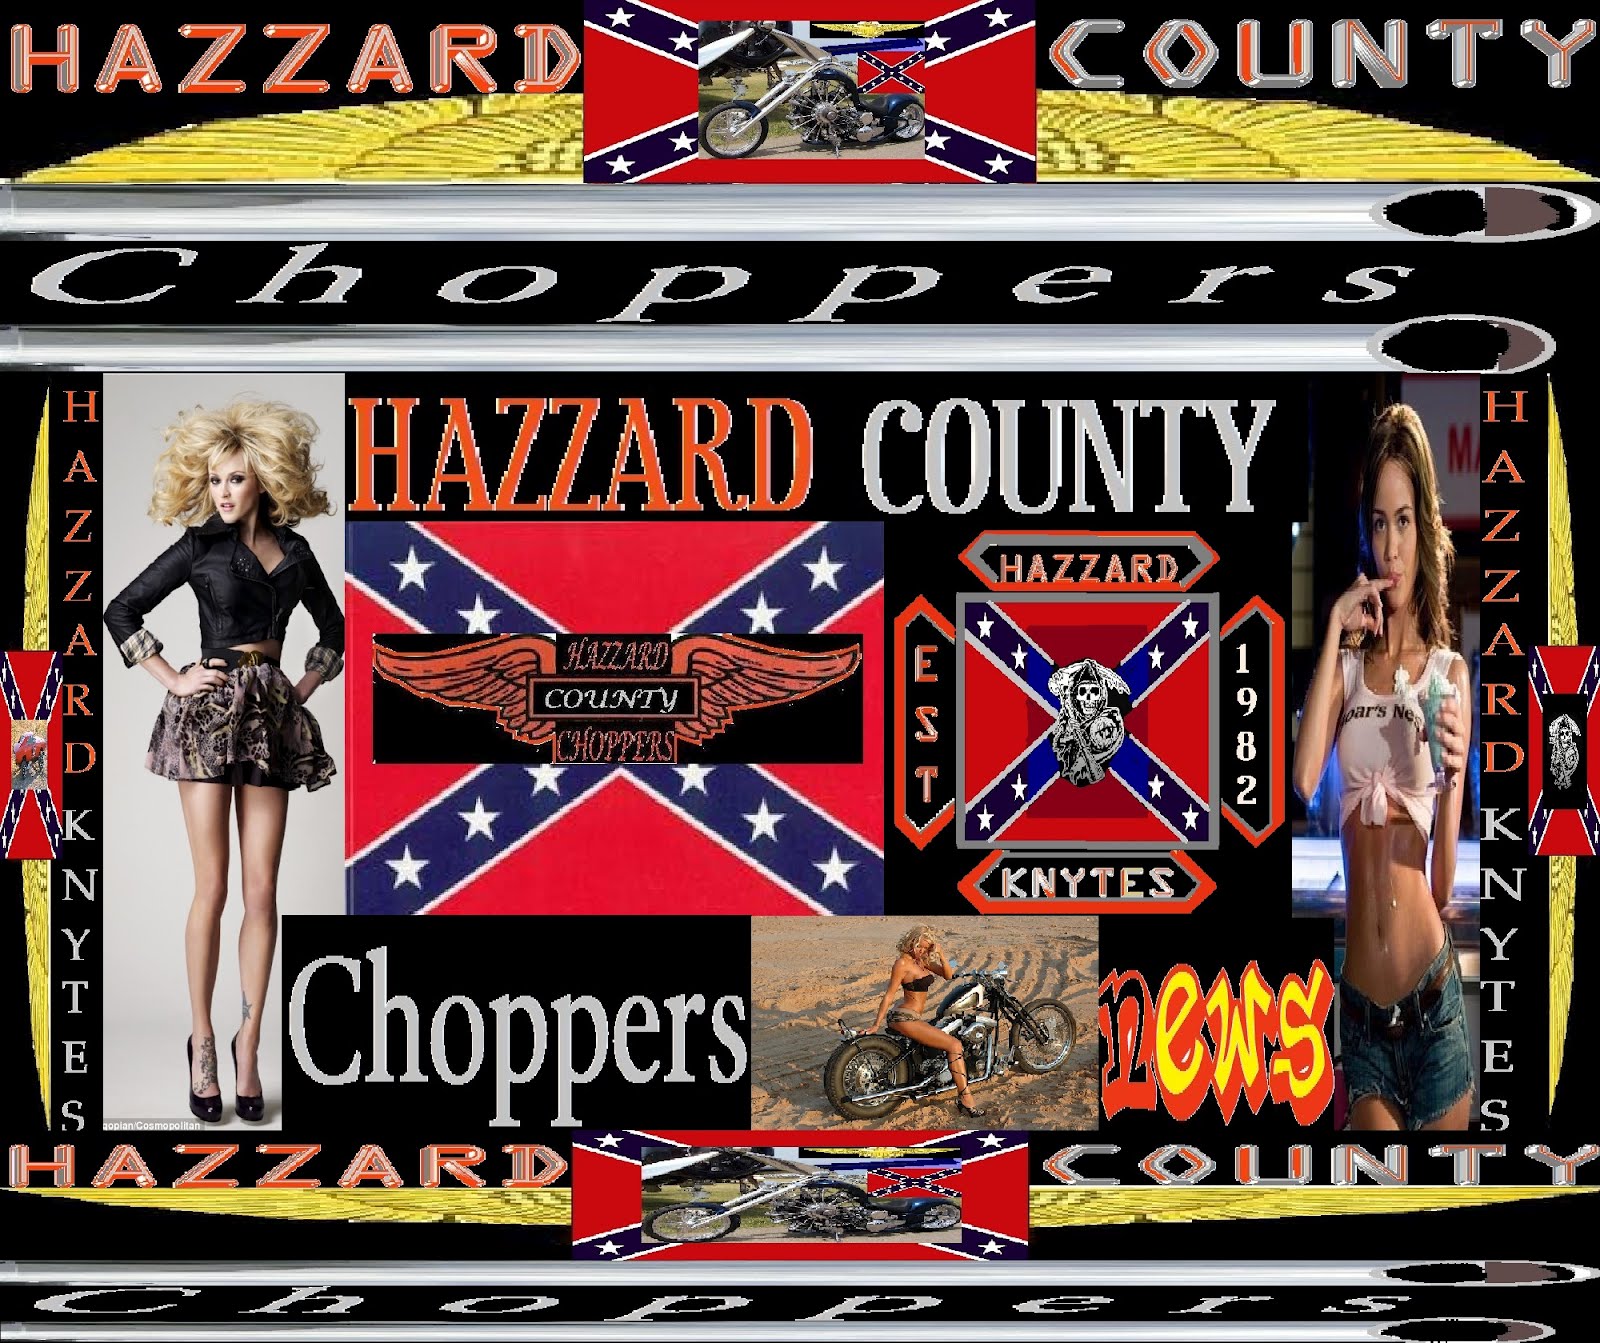 Hazzard County Choppers